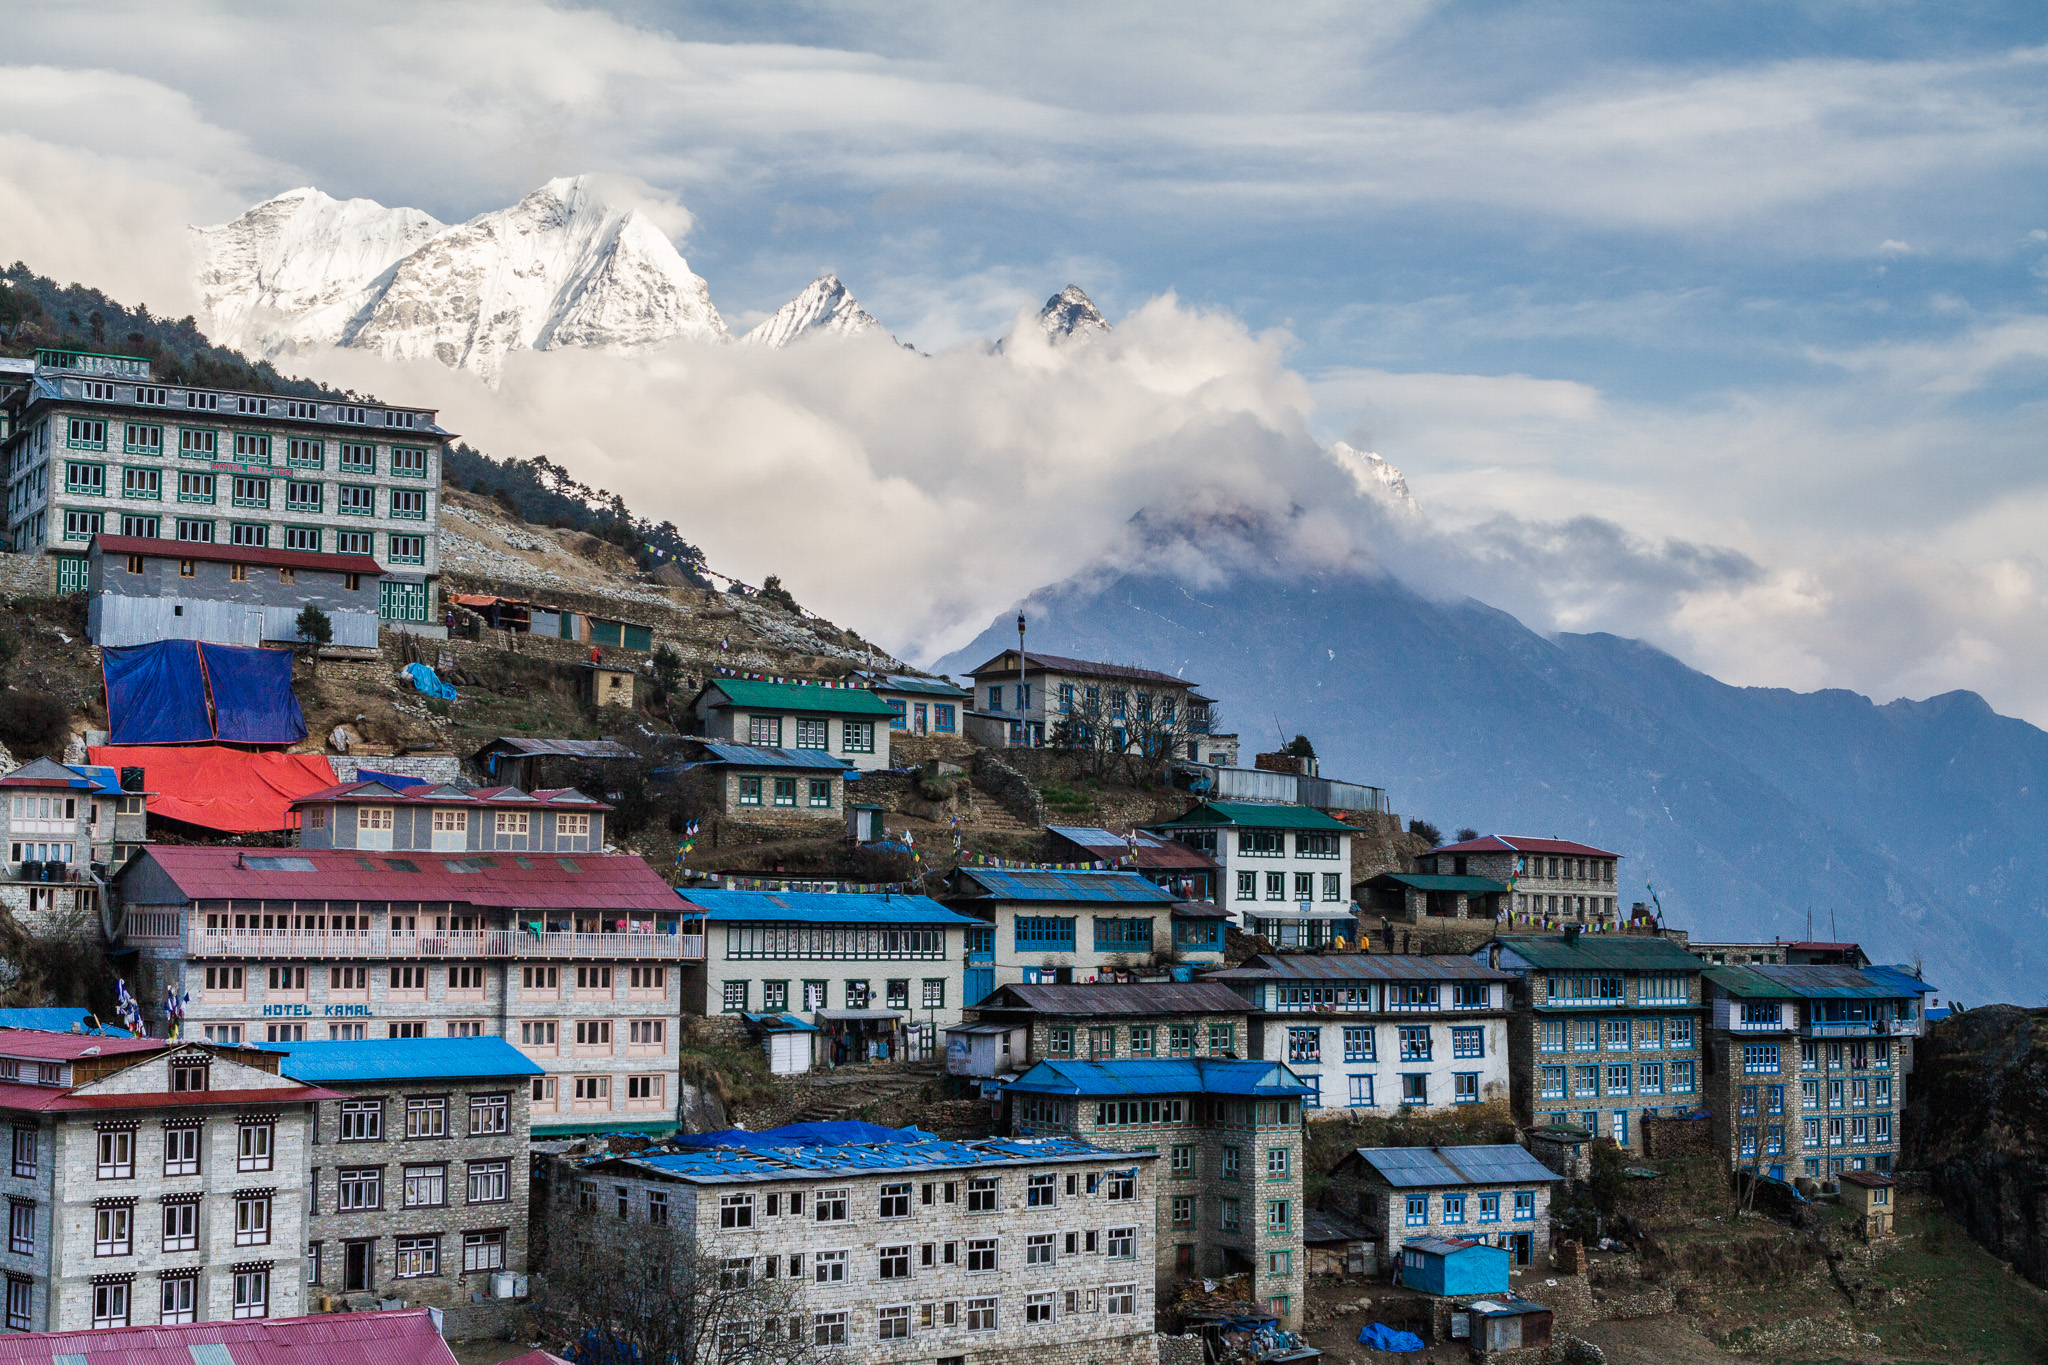 Ali-Barqawi-Studios-Travel-Adventure-Photo-Nepal-Everest-2014-Ep